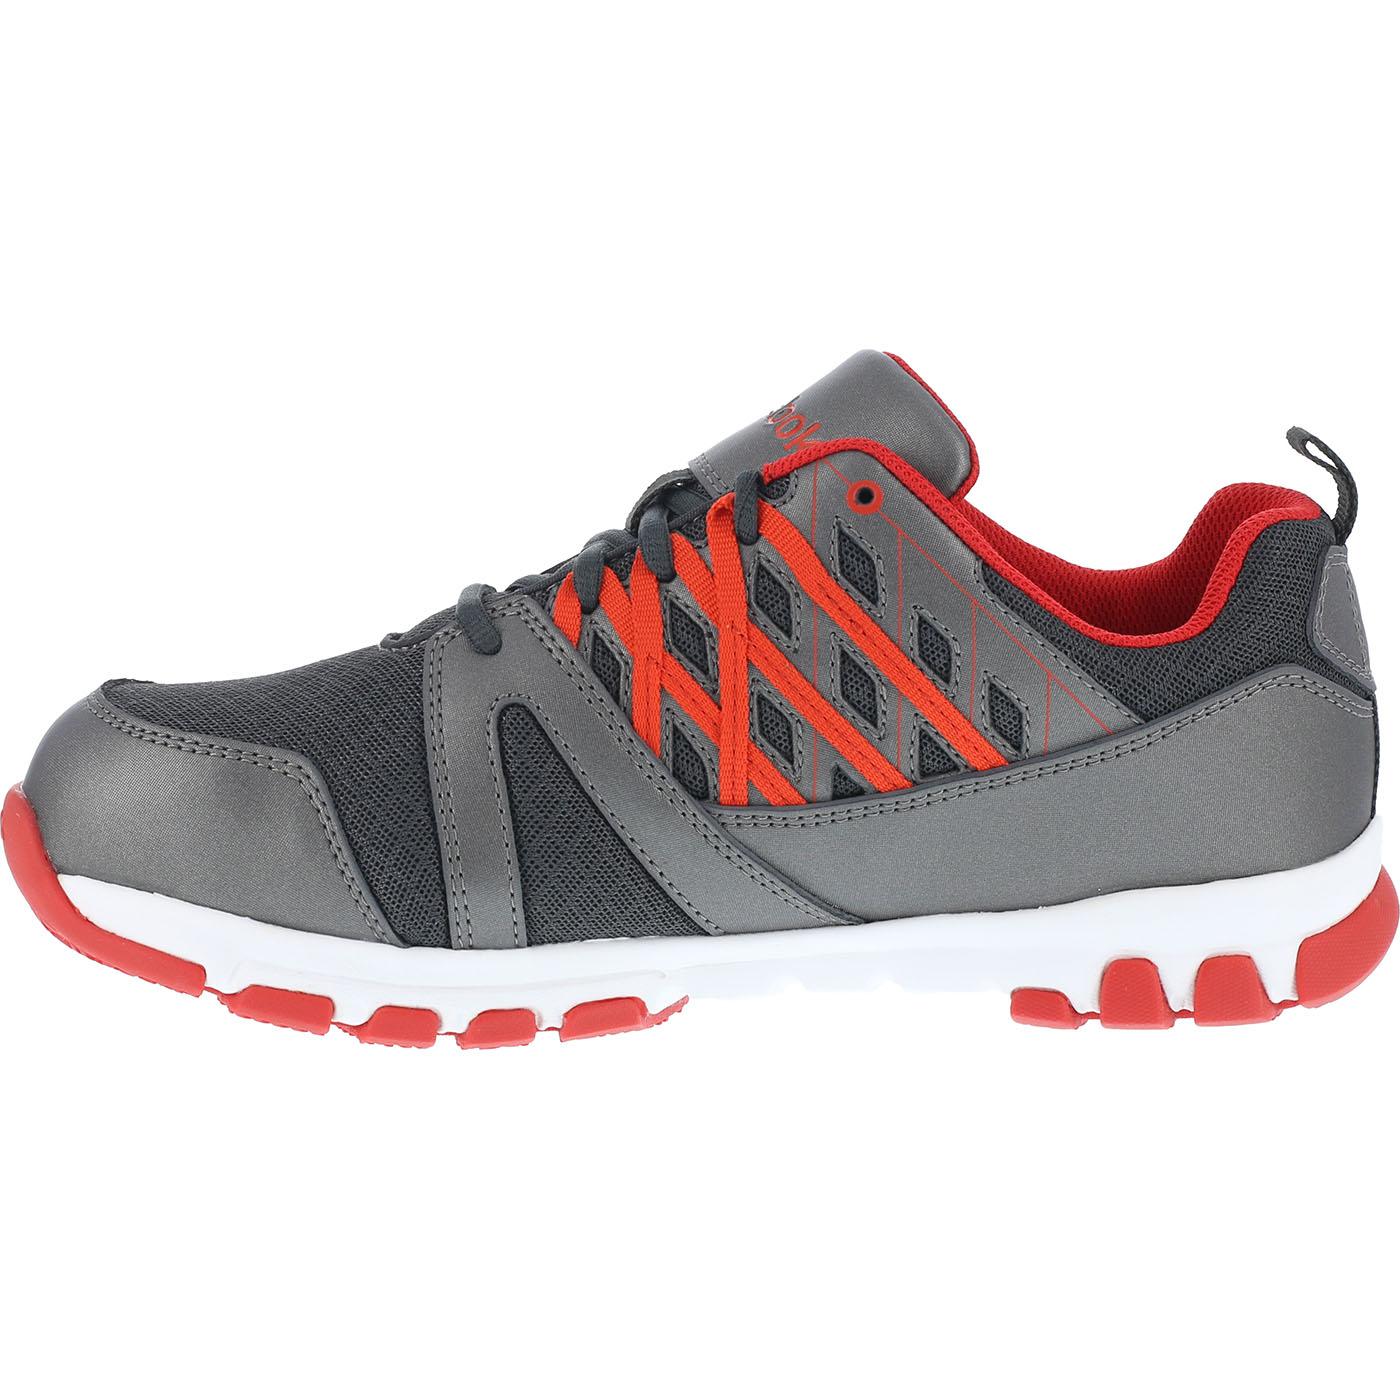 Reebok Sublite Steel Toe Work Athletic Shoe Size 14(W) - image 4 of 4